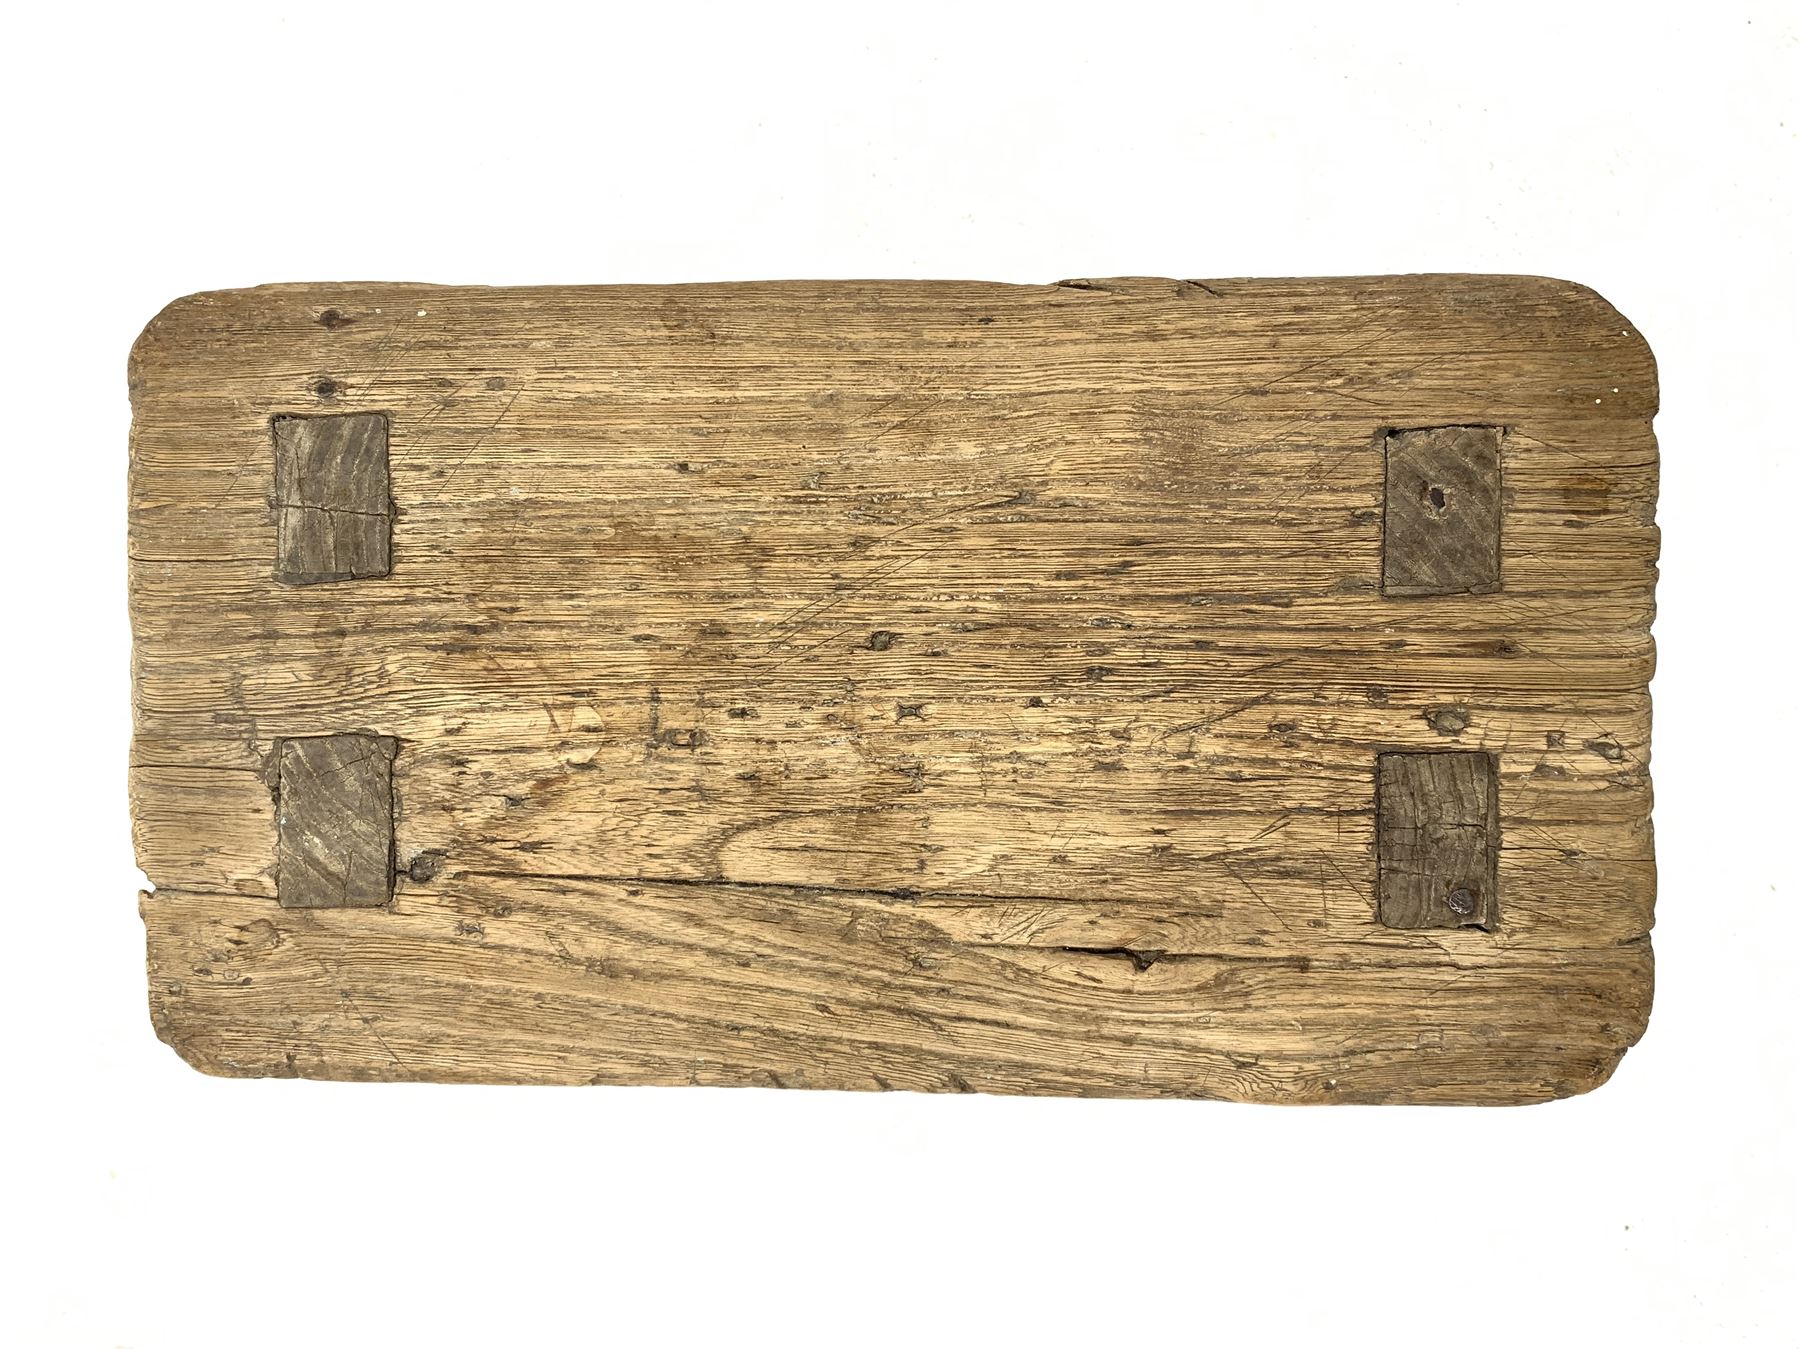 19th century vernacular elm plank stool - Image 2 of 3